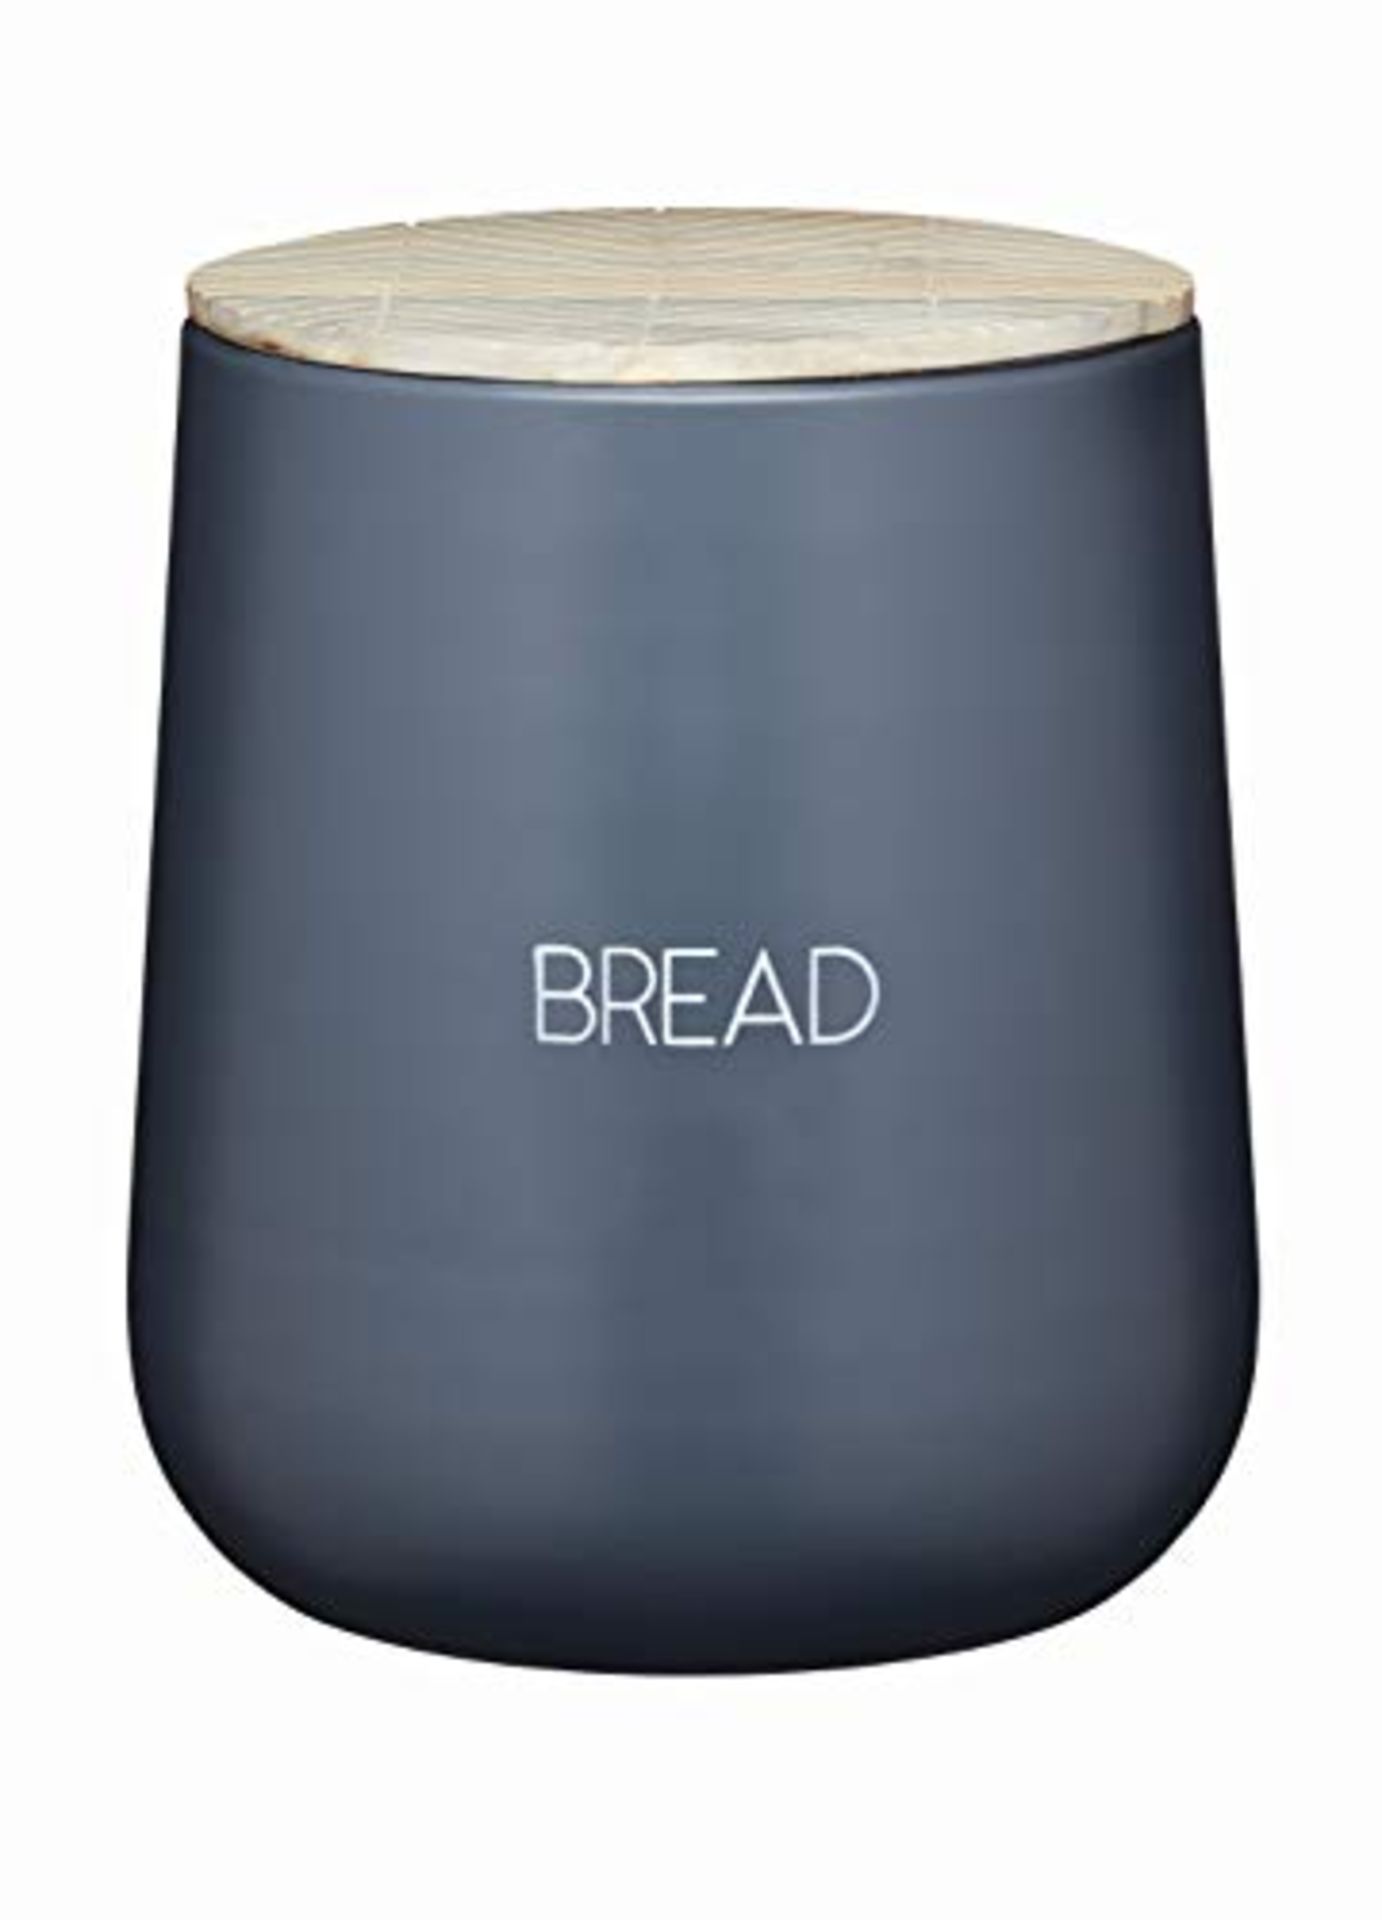 KitchenCraft Serenity Bread Bin with Airtight Lid, Iron/Mango Wood, Grey/Brown, 21.5 x